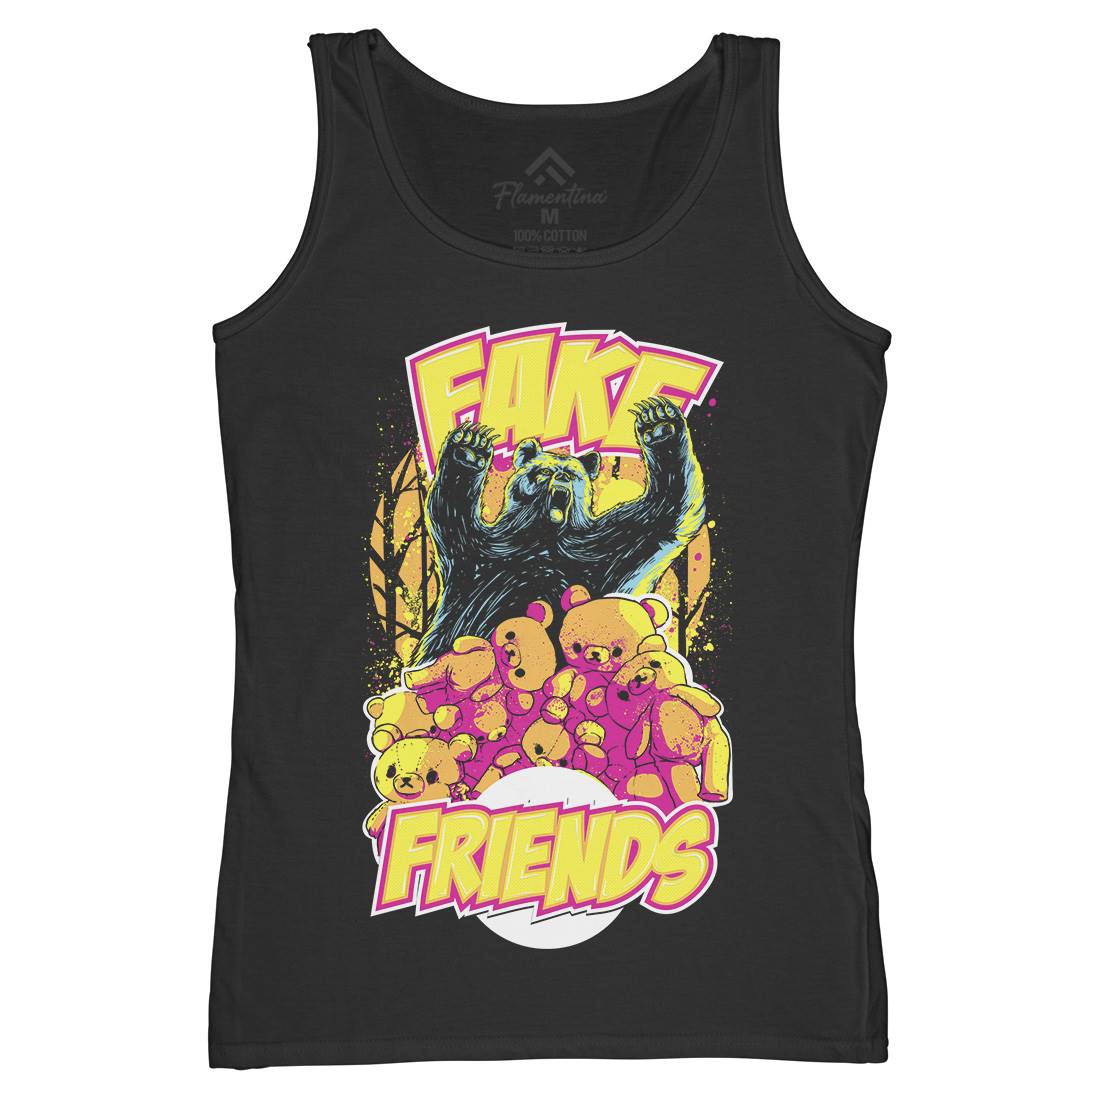 Fake Friends Womens Organic Tank Top Vest Retro C929